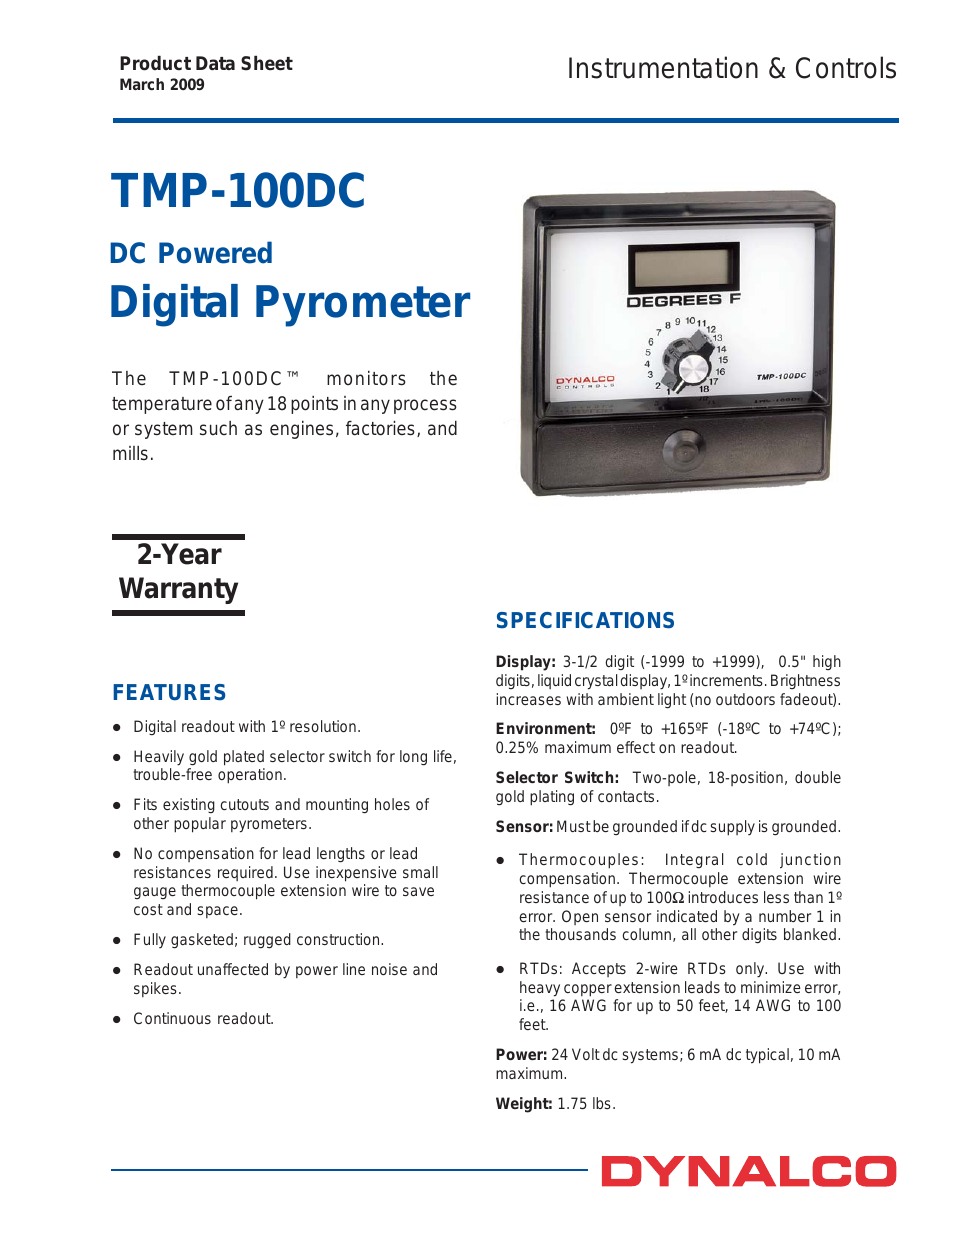 TMP-100DC Temperature Monitor